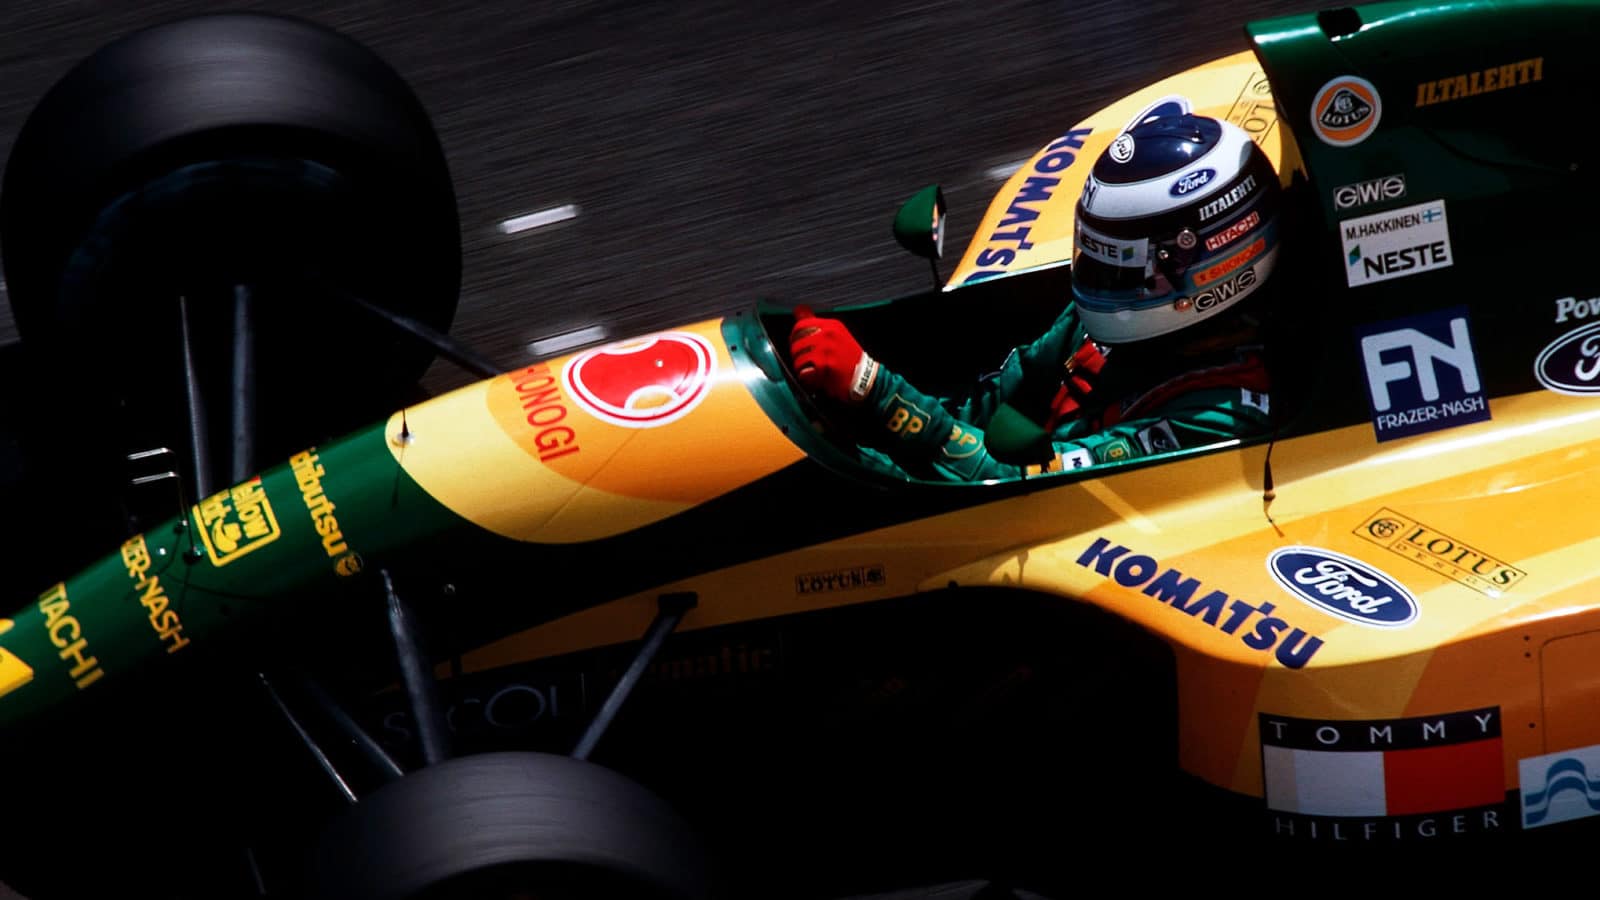 Lotus of Mika Hakkinen at Spa 1992